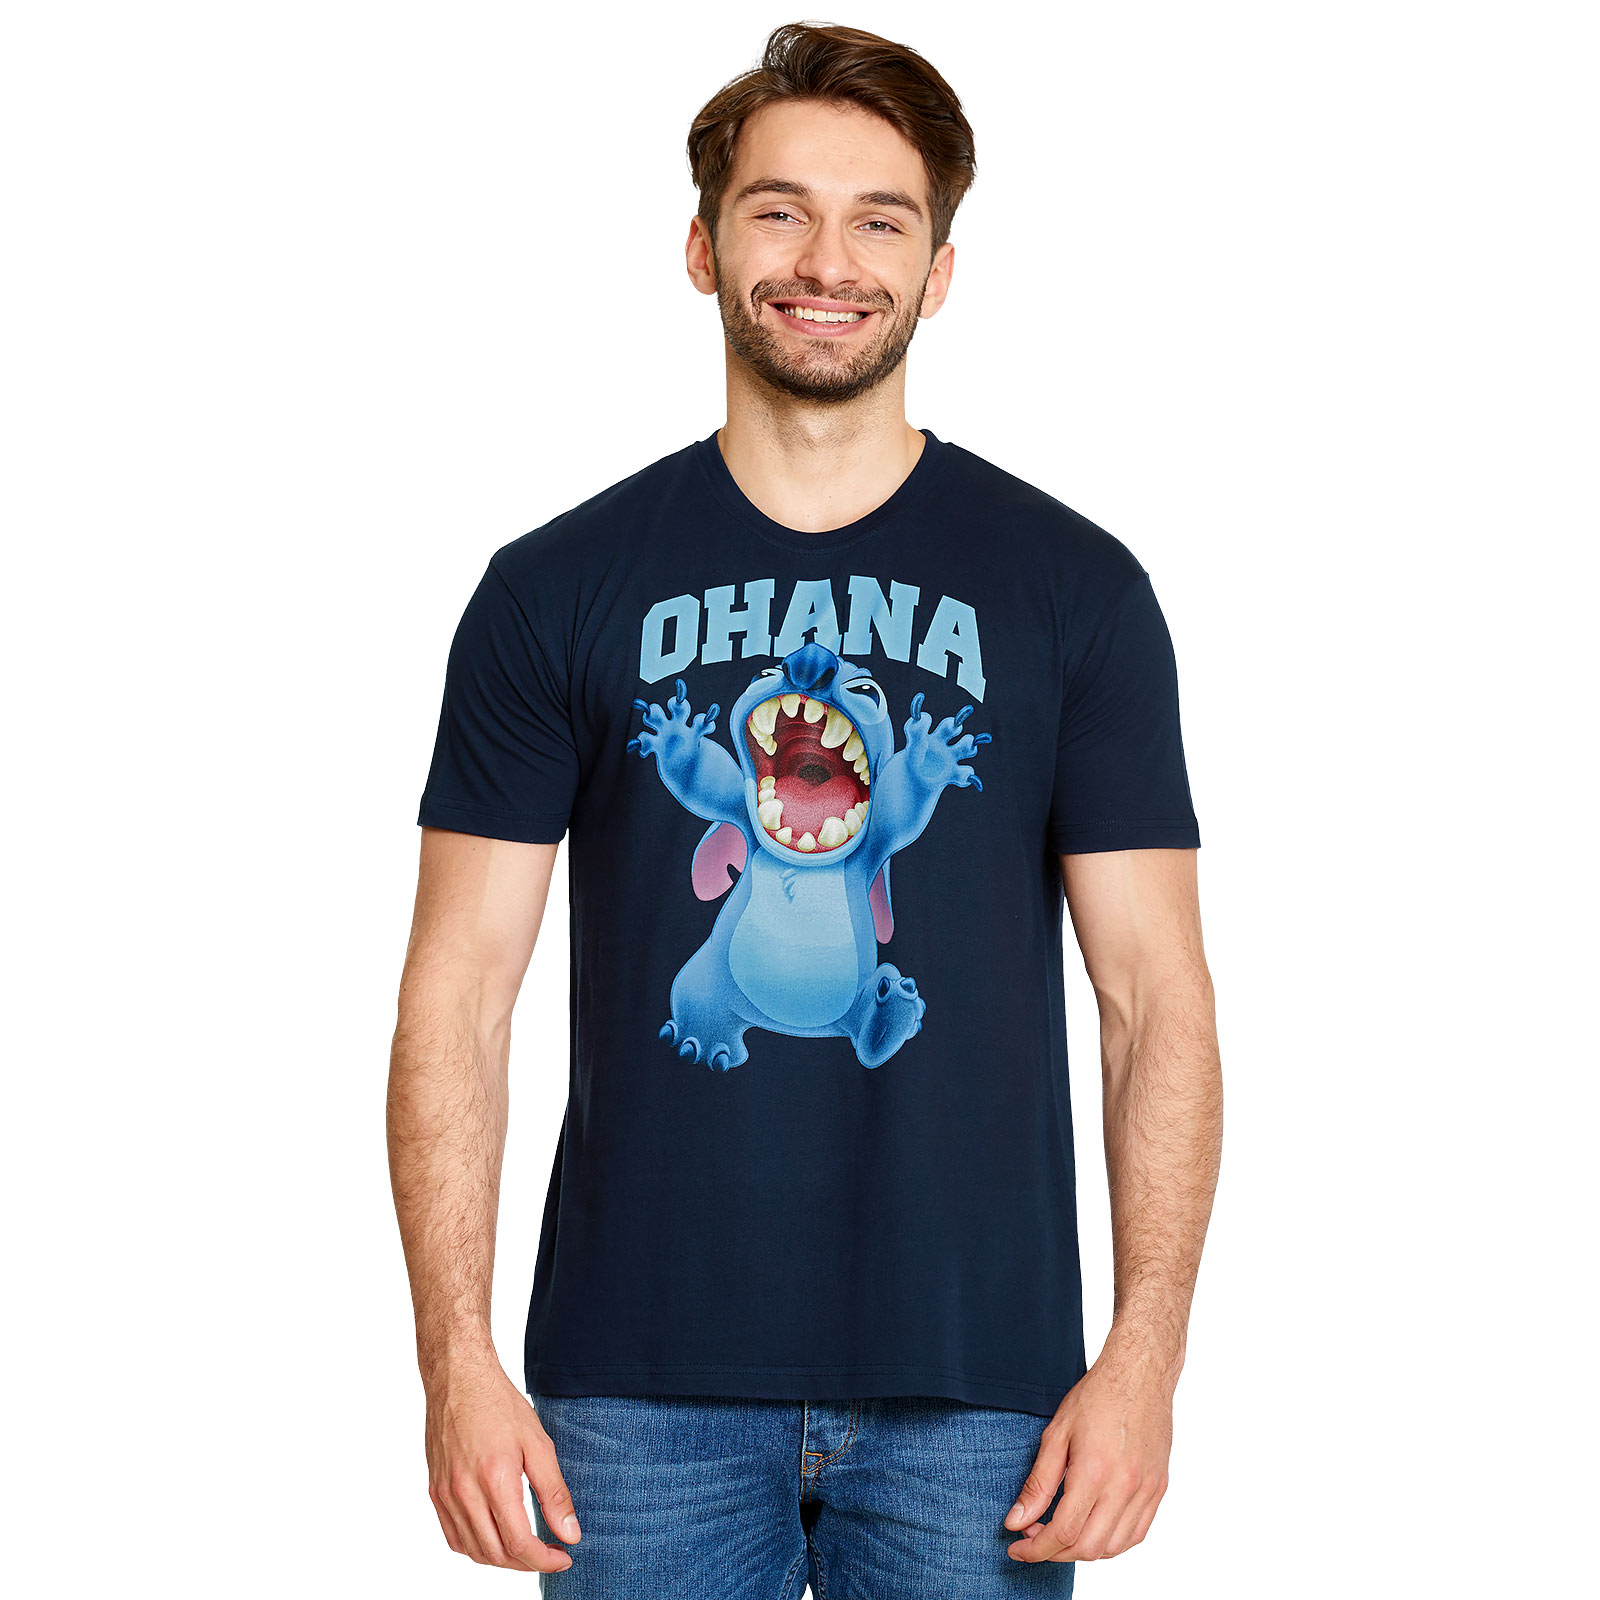 Lilo & Stitch - T-shirt Ohana bleu